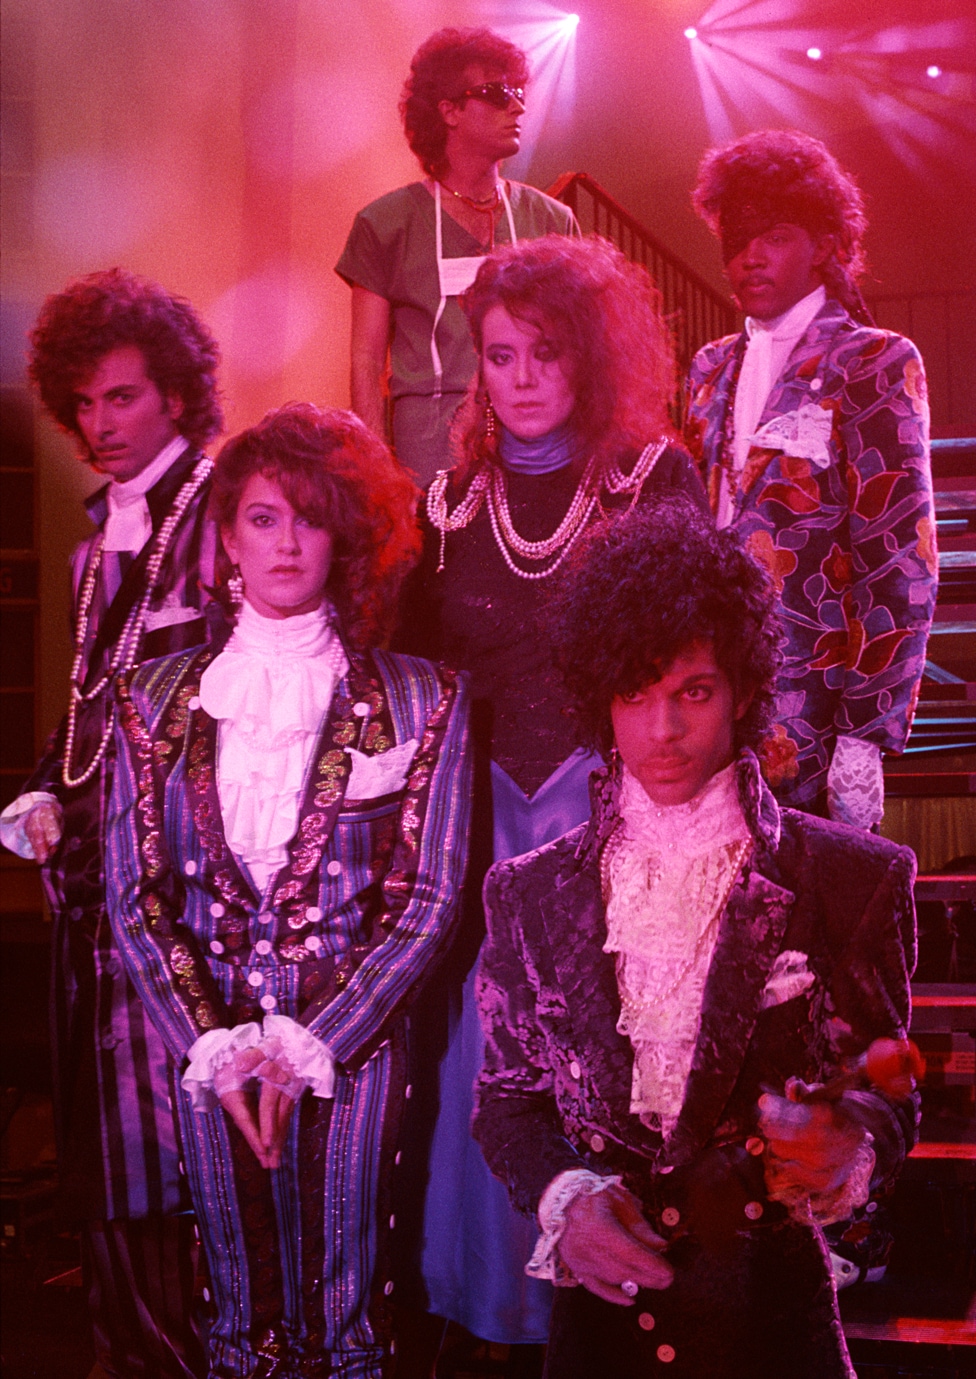 Prince and The Revolution photo by Nancy Bundt